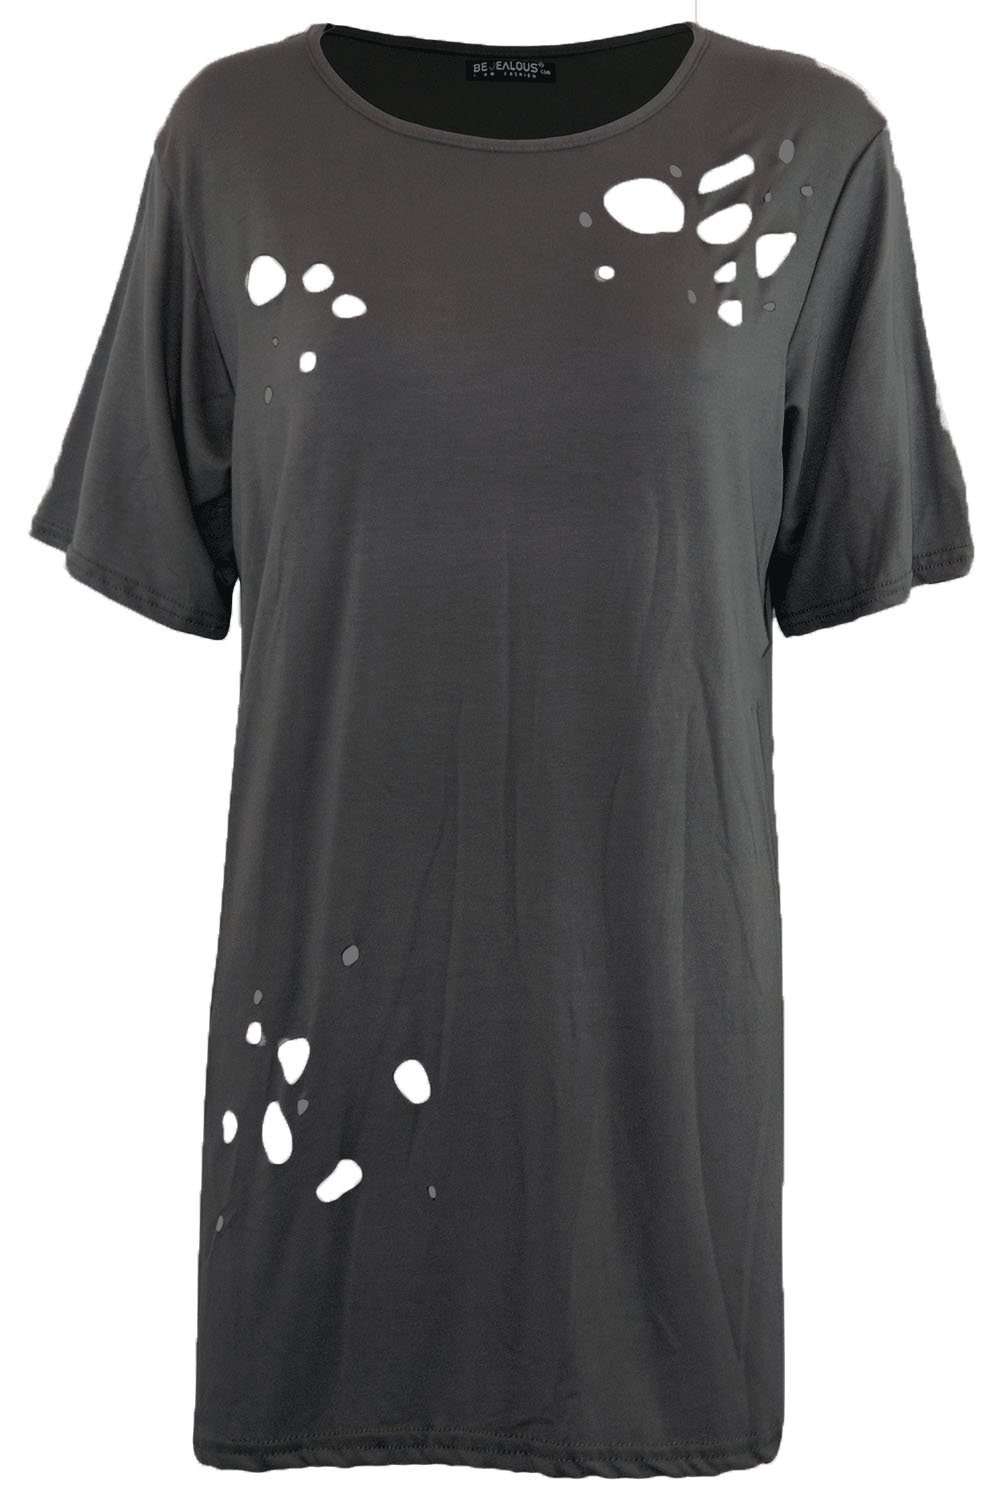 Clara Oversized Basic Ripped Jersey TShirt - bejealous-com